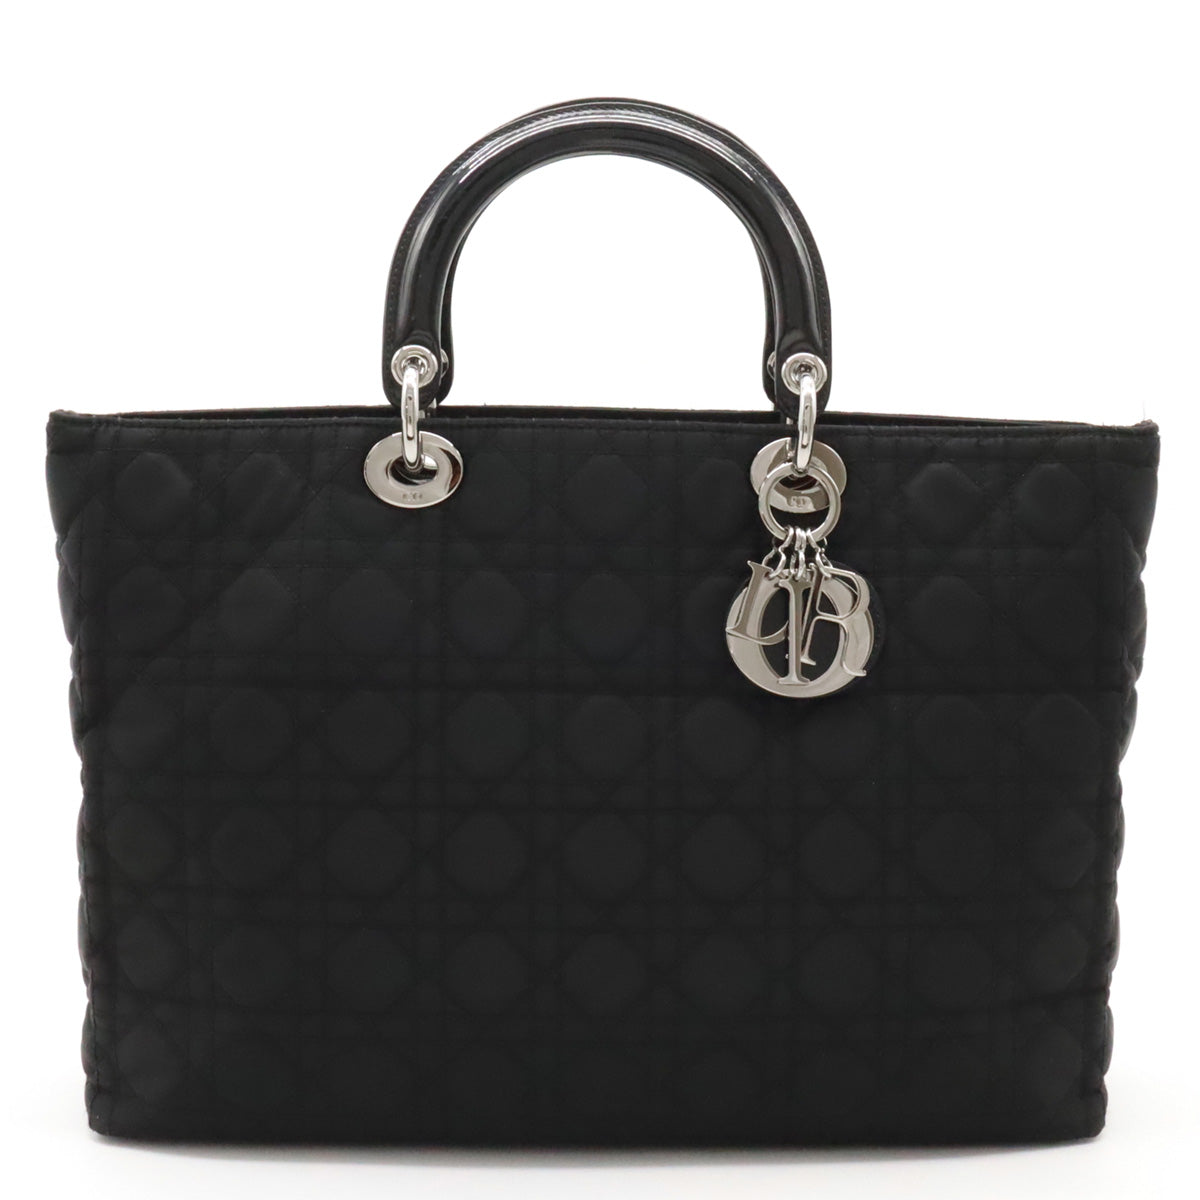 Christian Dior Tote Bag Nylon Patent Leather Black Silver Ladies